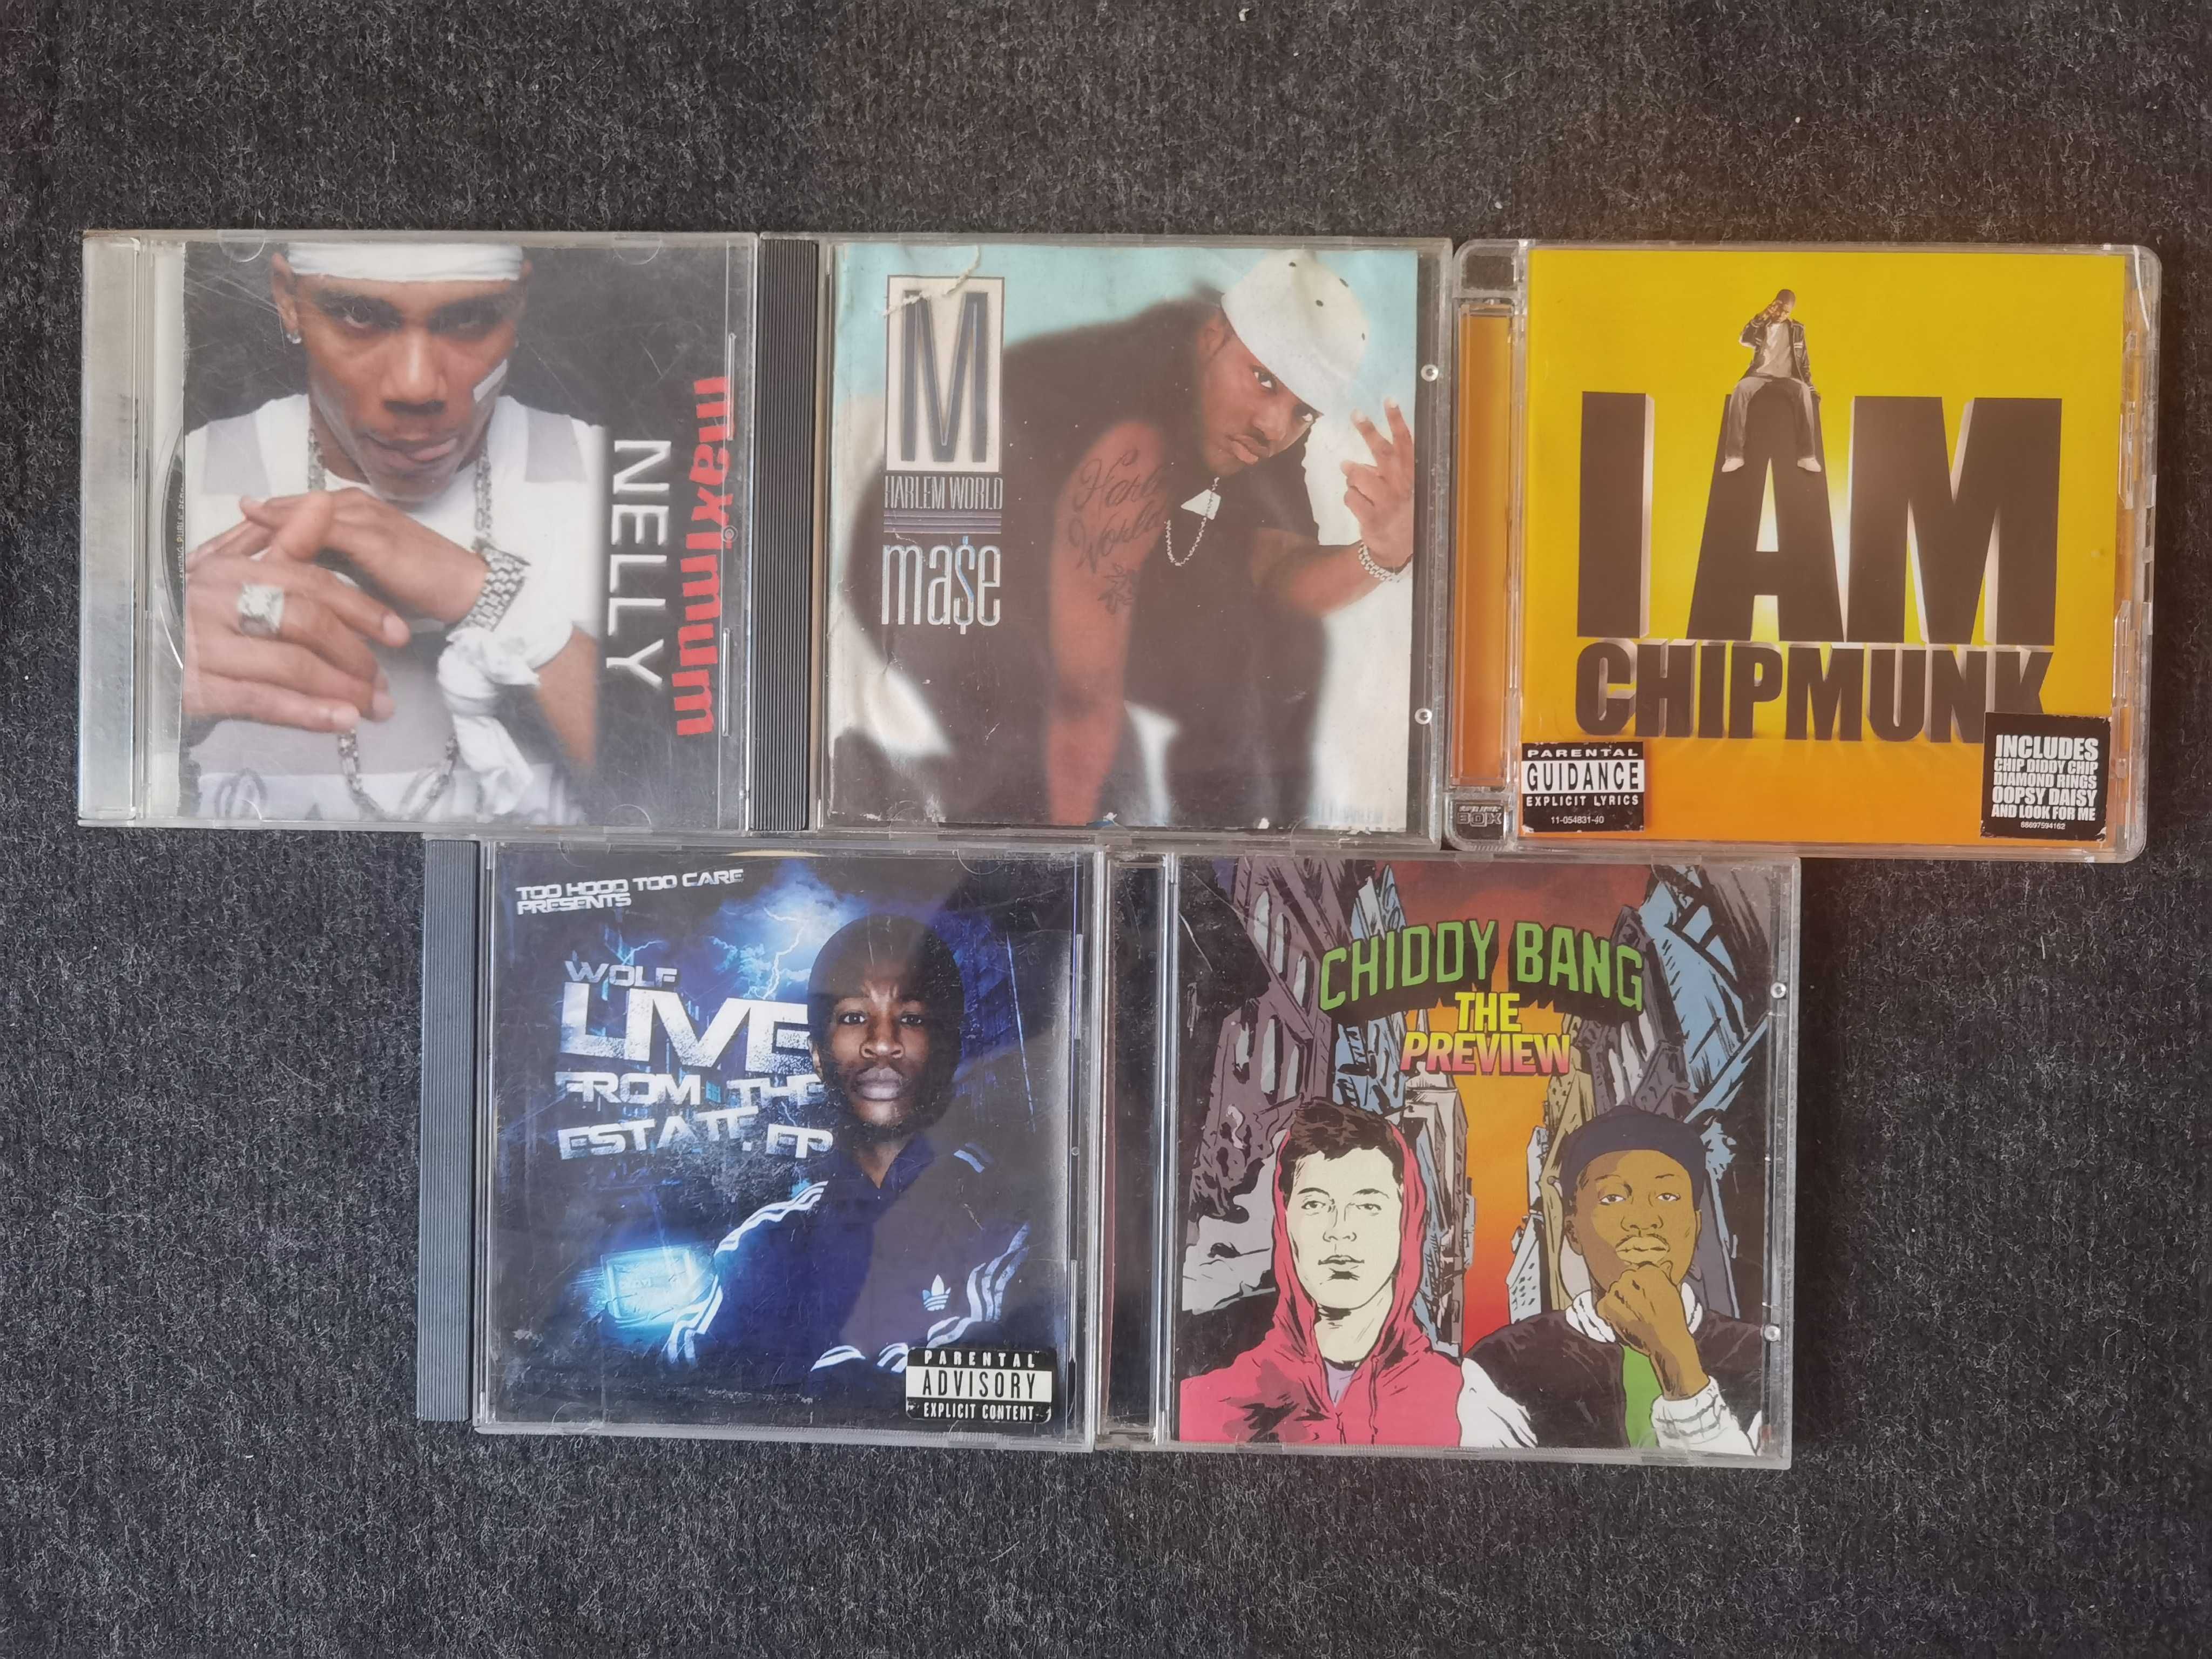 CD-uri audio Rap,Hip-Hop: 50 Cent,Nelly,Usher, Nerd, Ja Rule,Lemar,etc